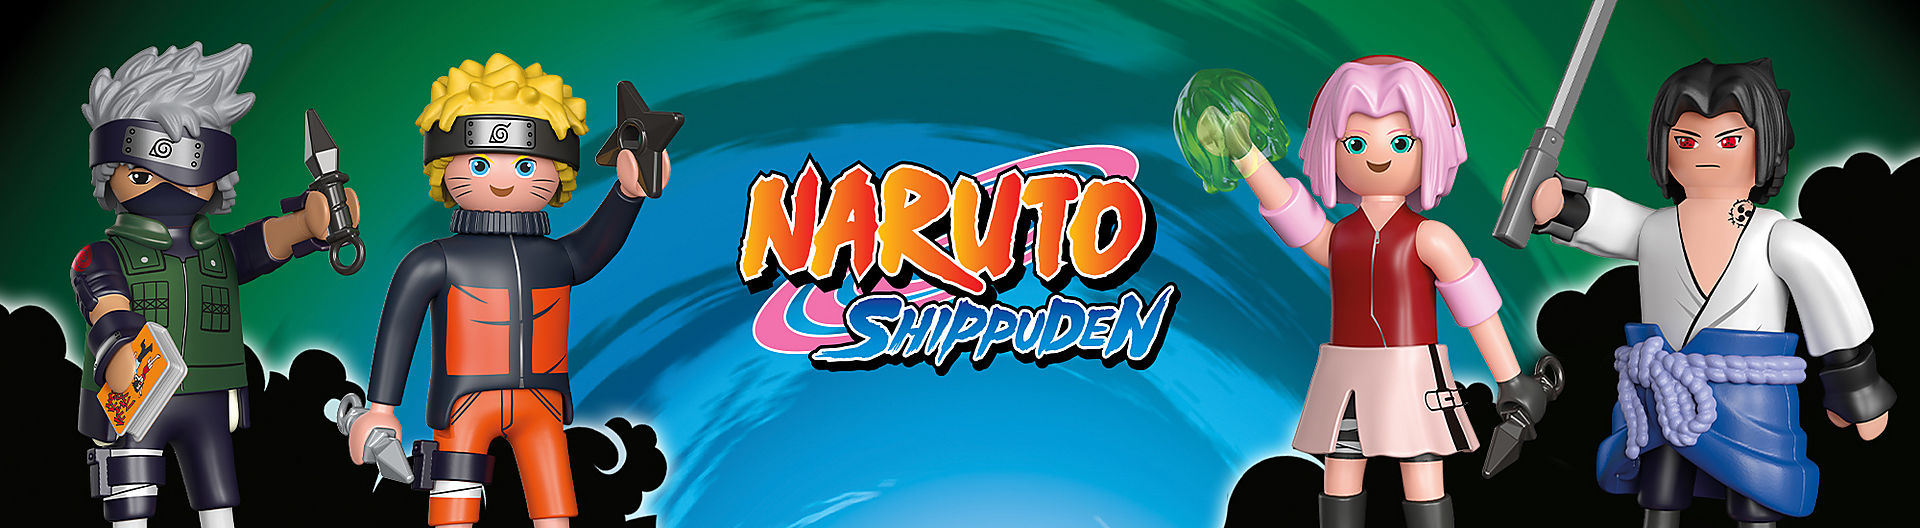 NARUTO SHIPPUDEN - The Sensational Anime Success Joins PLAYMOBIL!